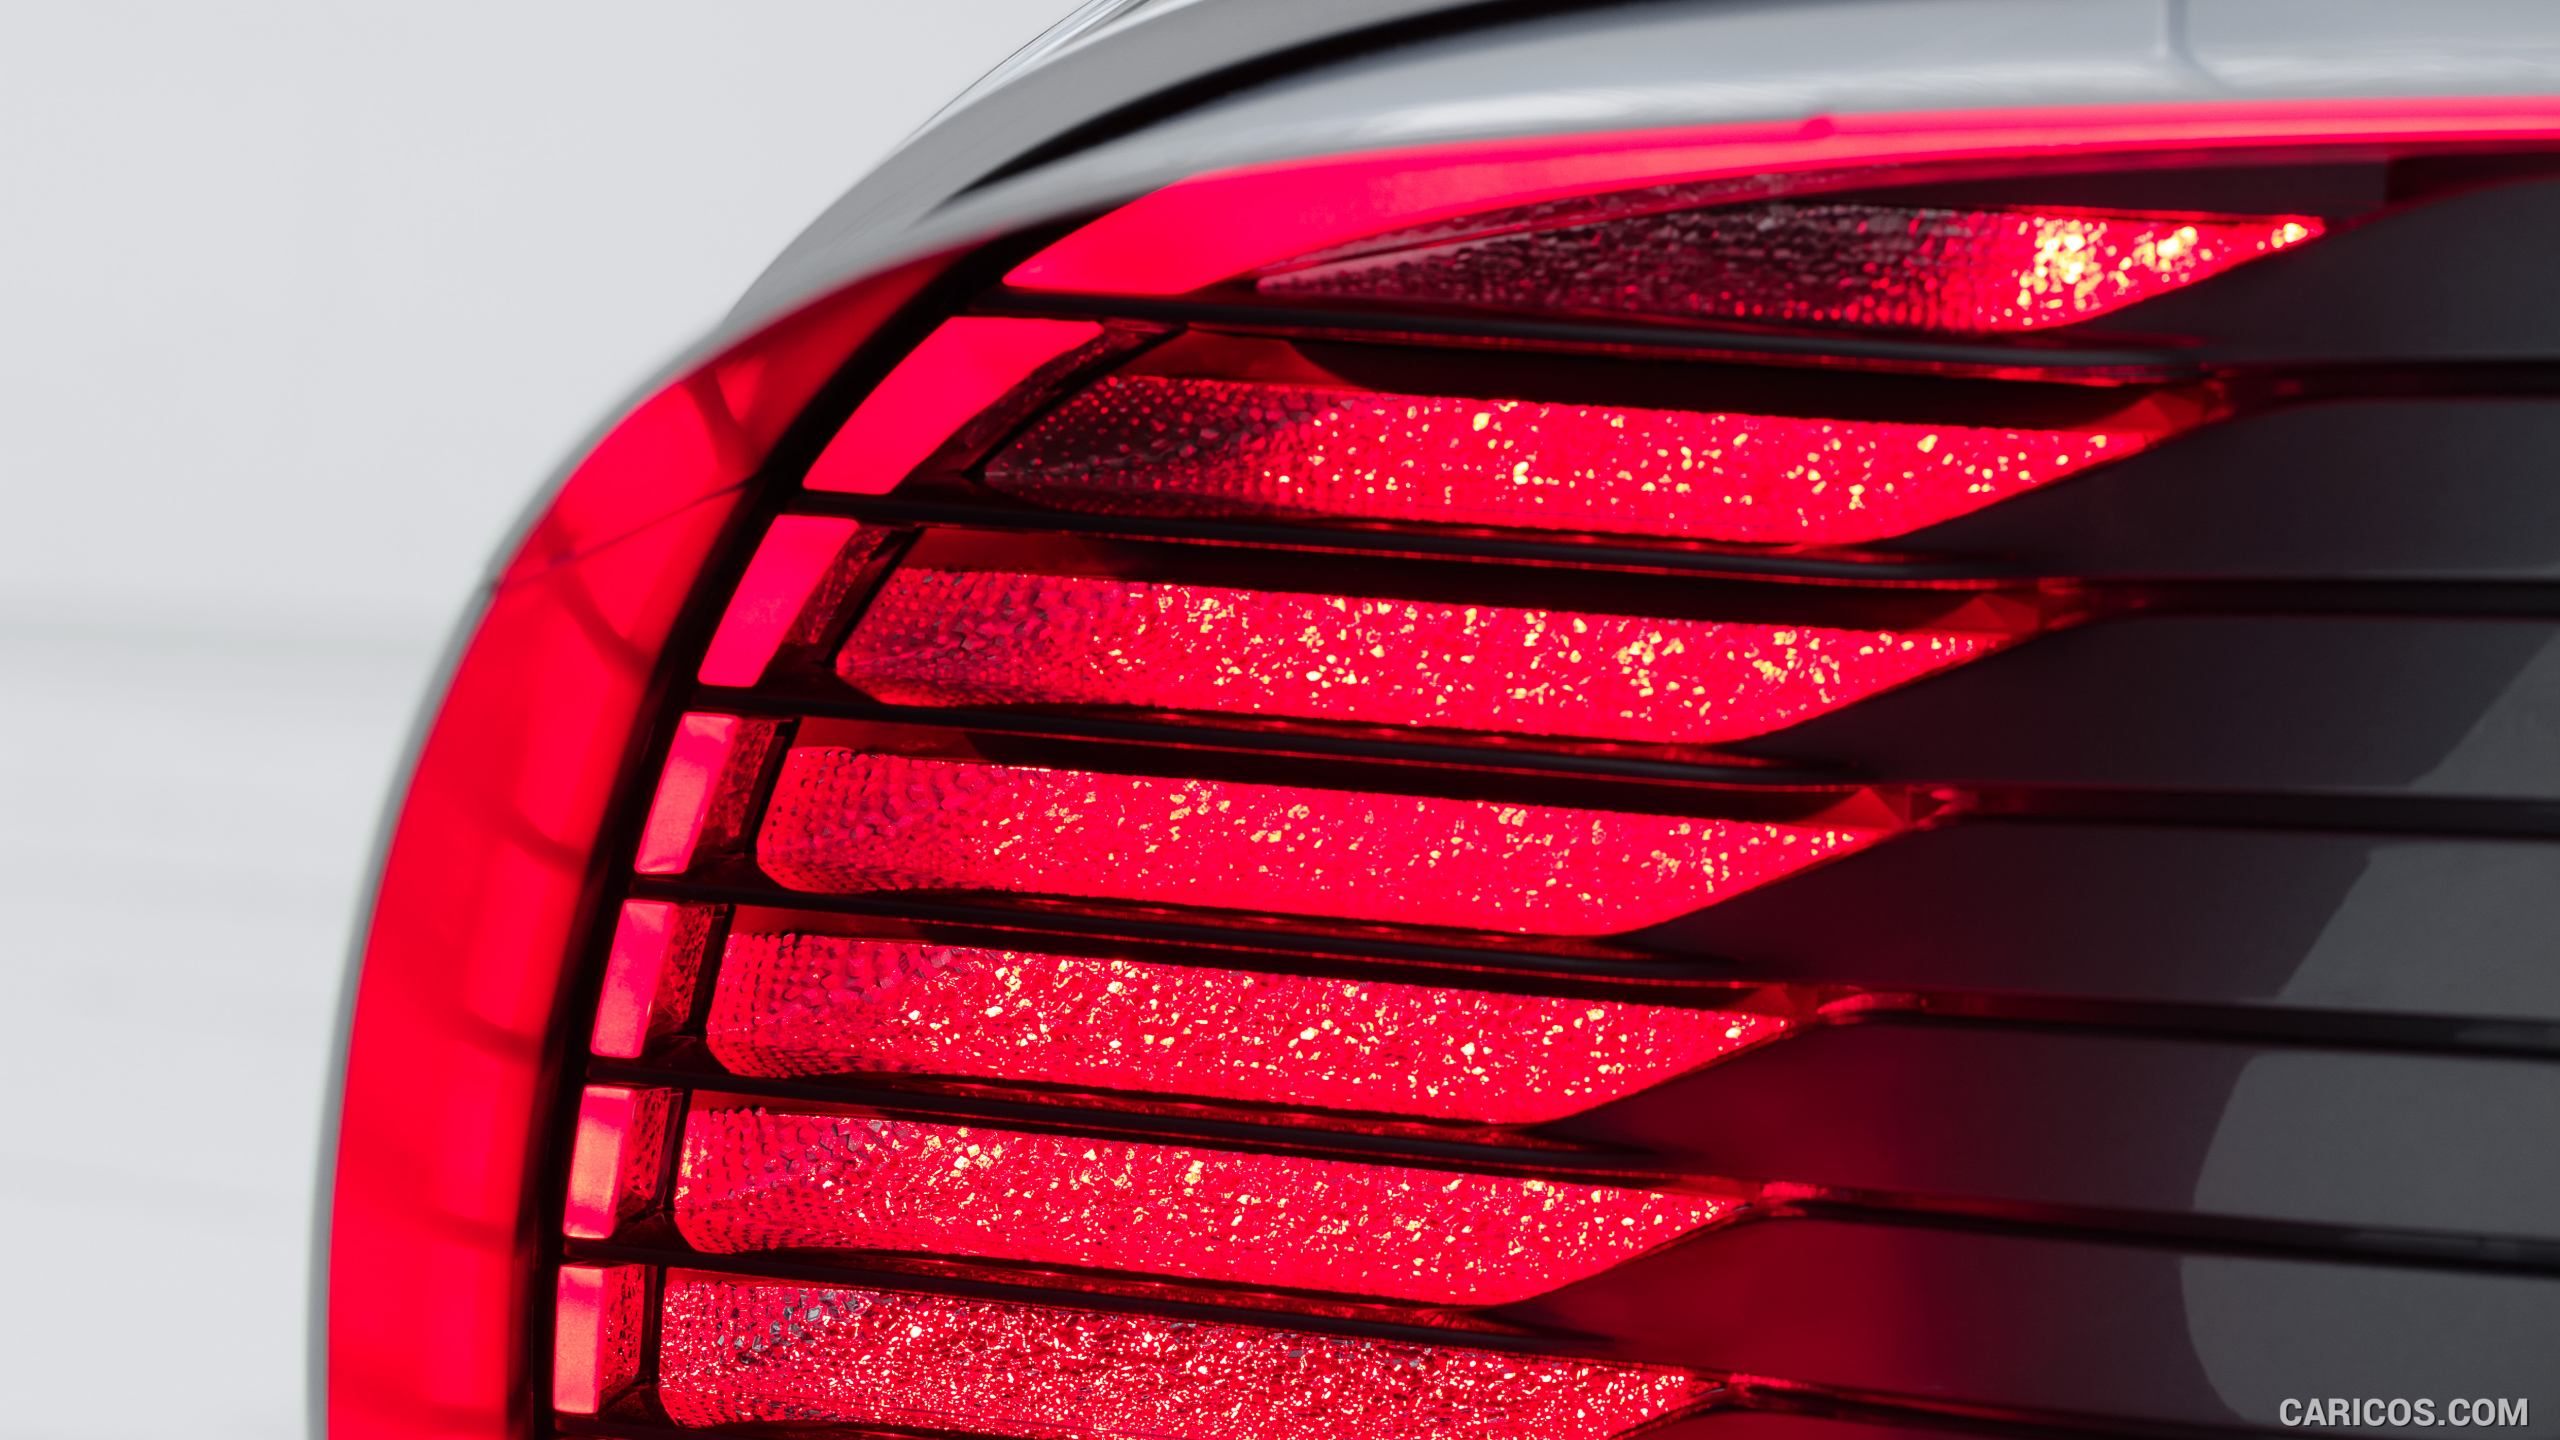 2015 Mercedes-Benz Concept IAA (Intelligent Aerodynamic Automobile) - Tail Light, #31 of 49